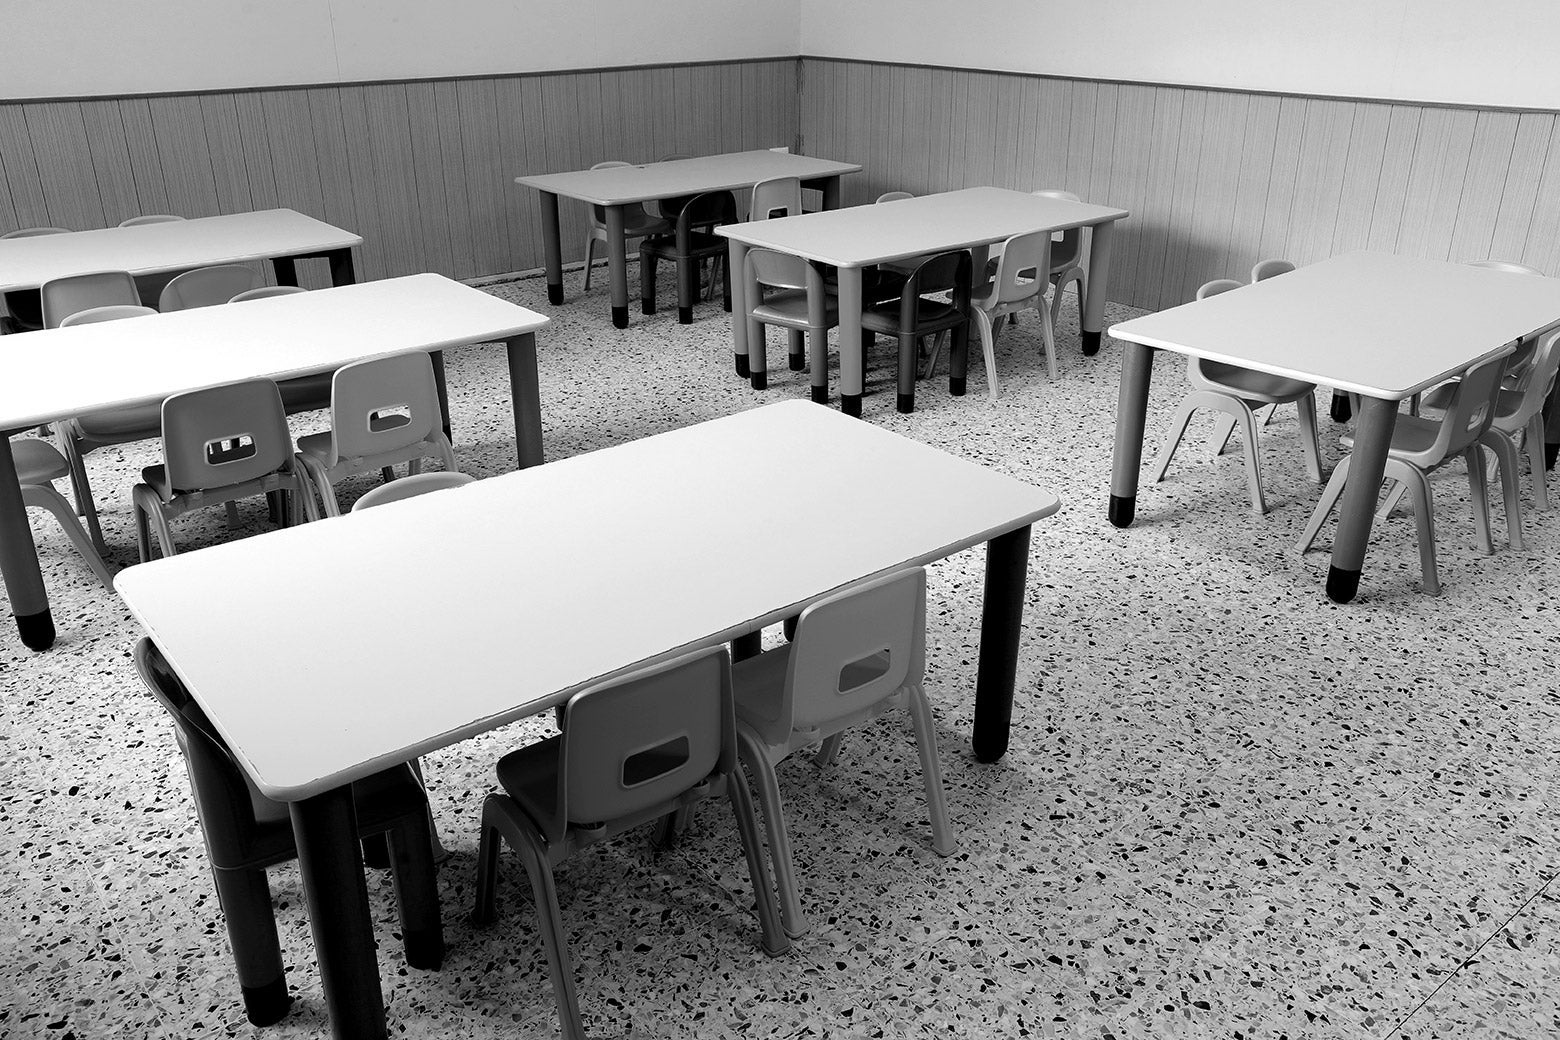  An empty grade school classroom.